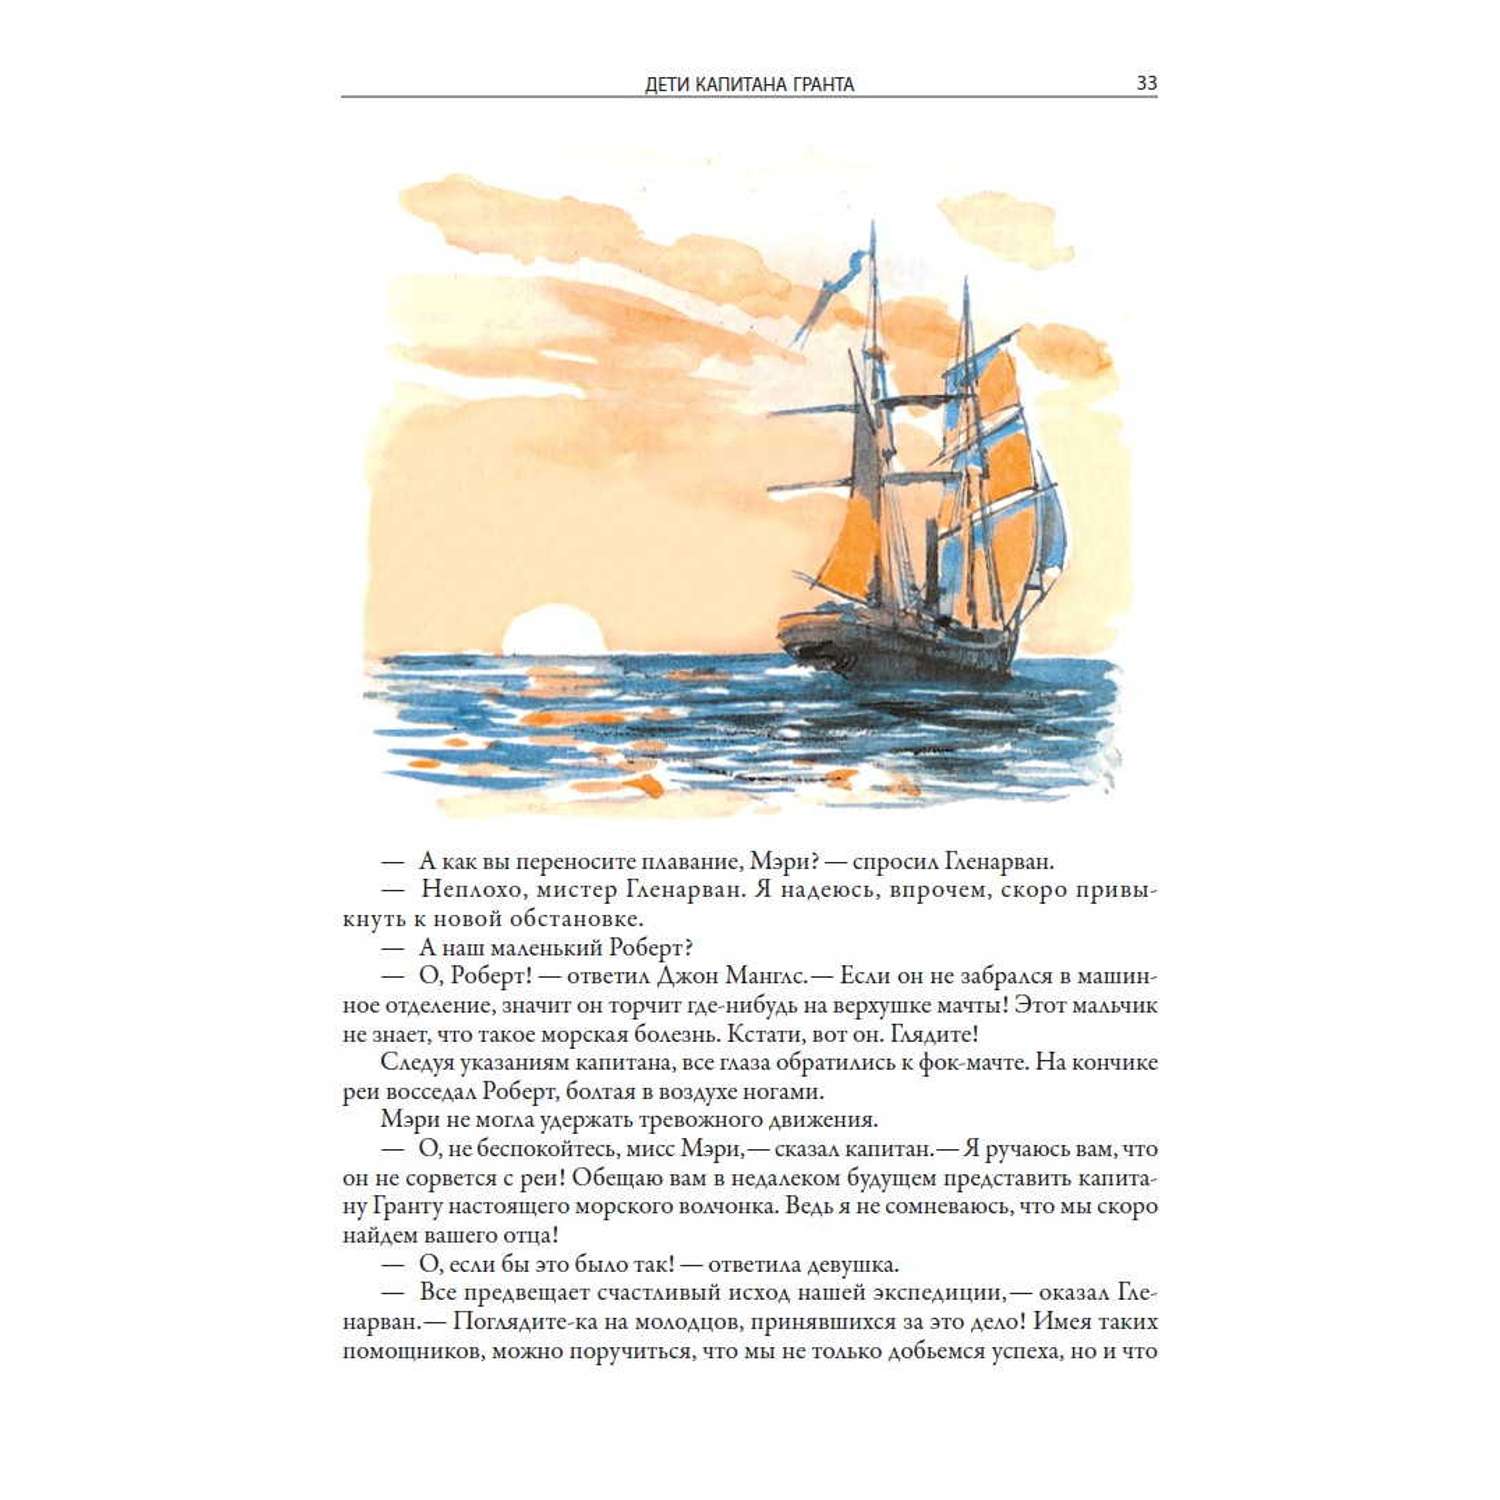 Книга СЗКЭО БМЛ Верн Дети капитана Гранта иллюстрации Луганского - фото 7